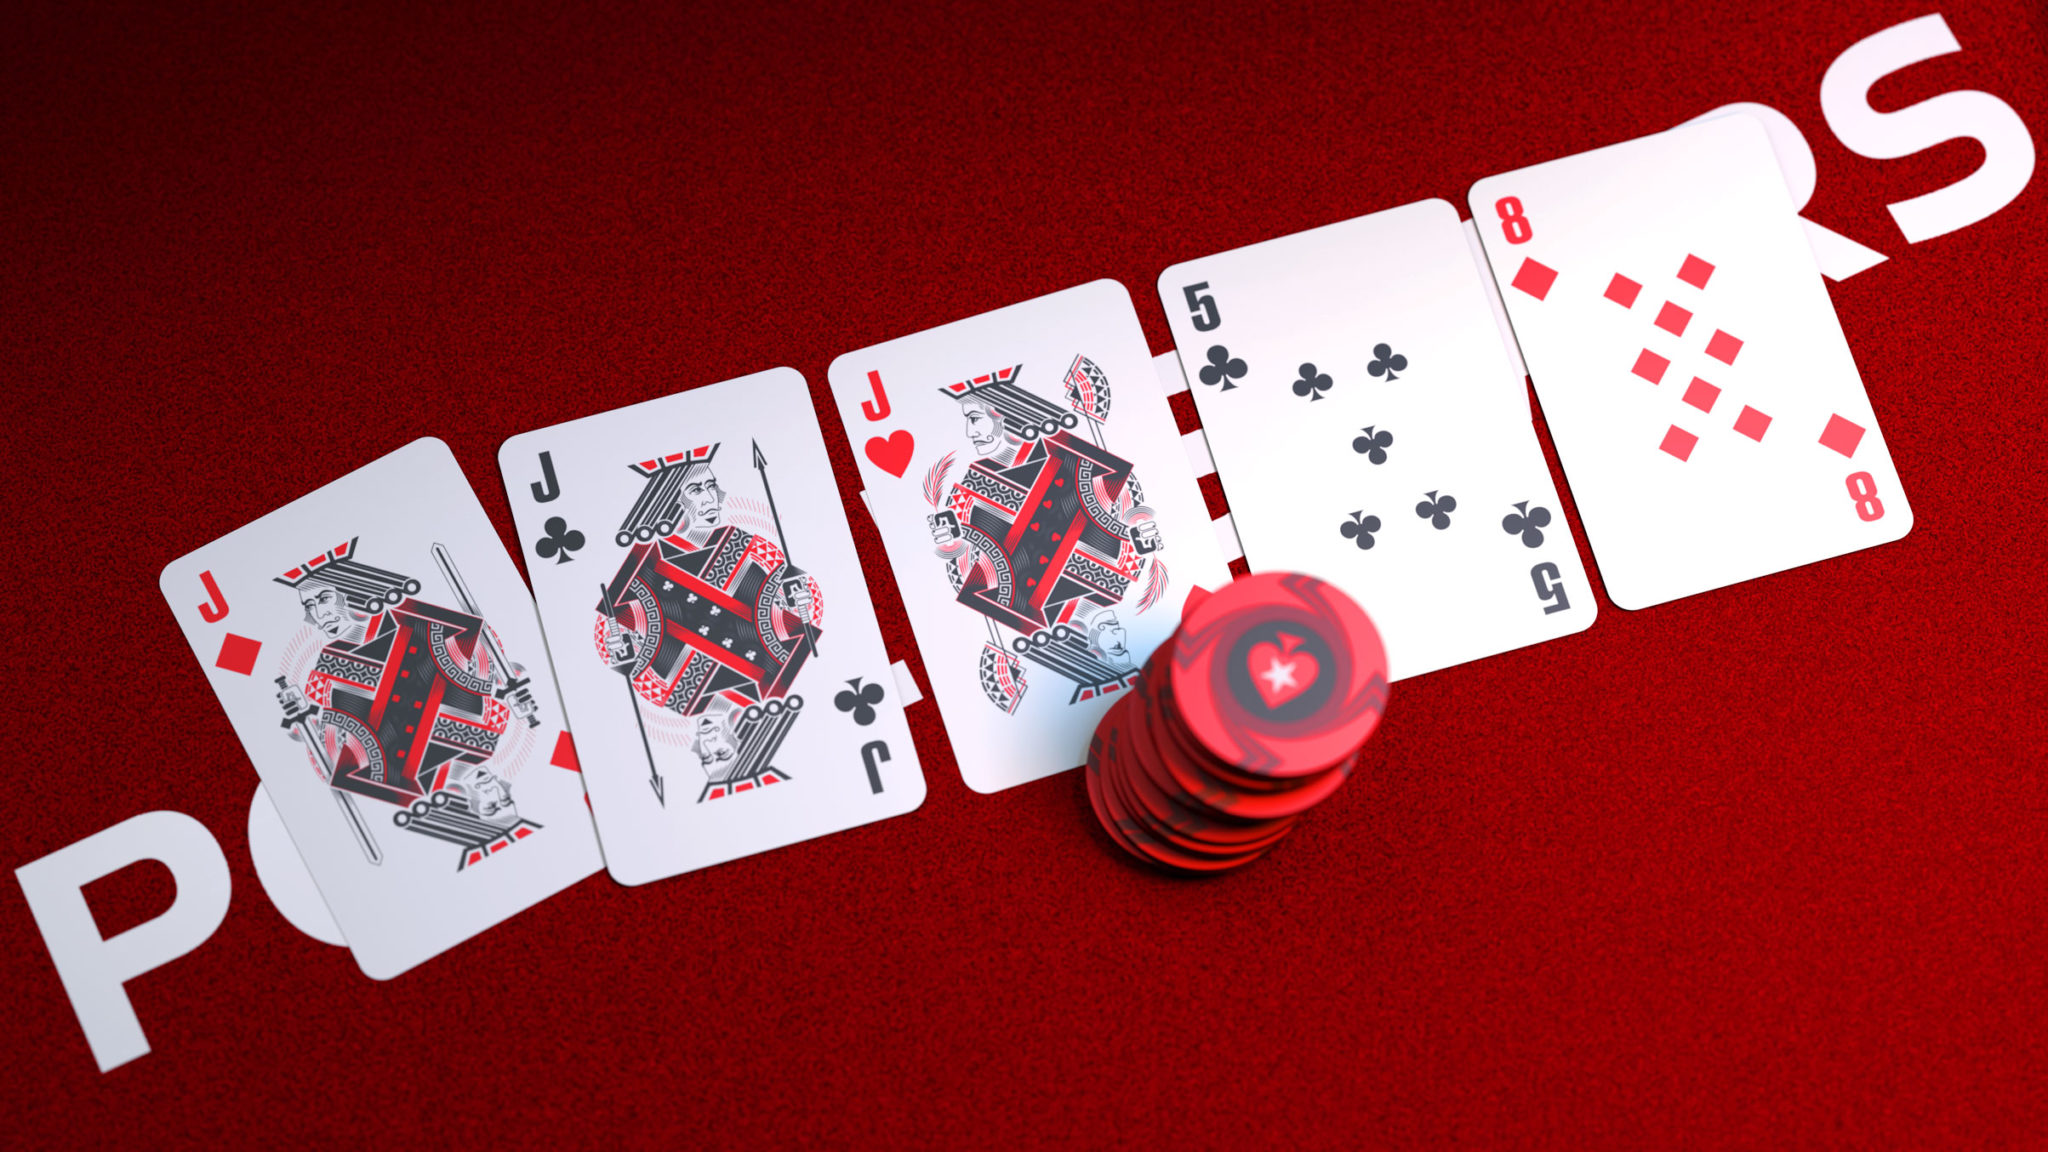 manos-de-poker-clasificaci-n-pokerstars-learn-latam